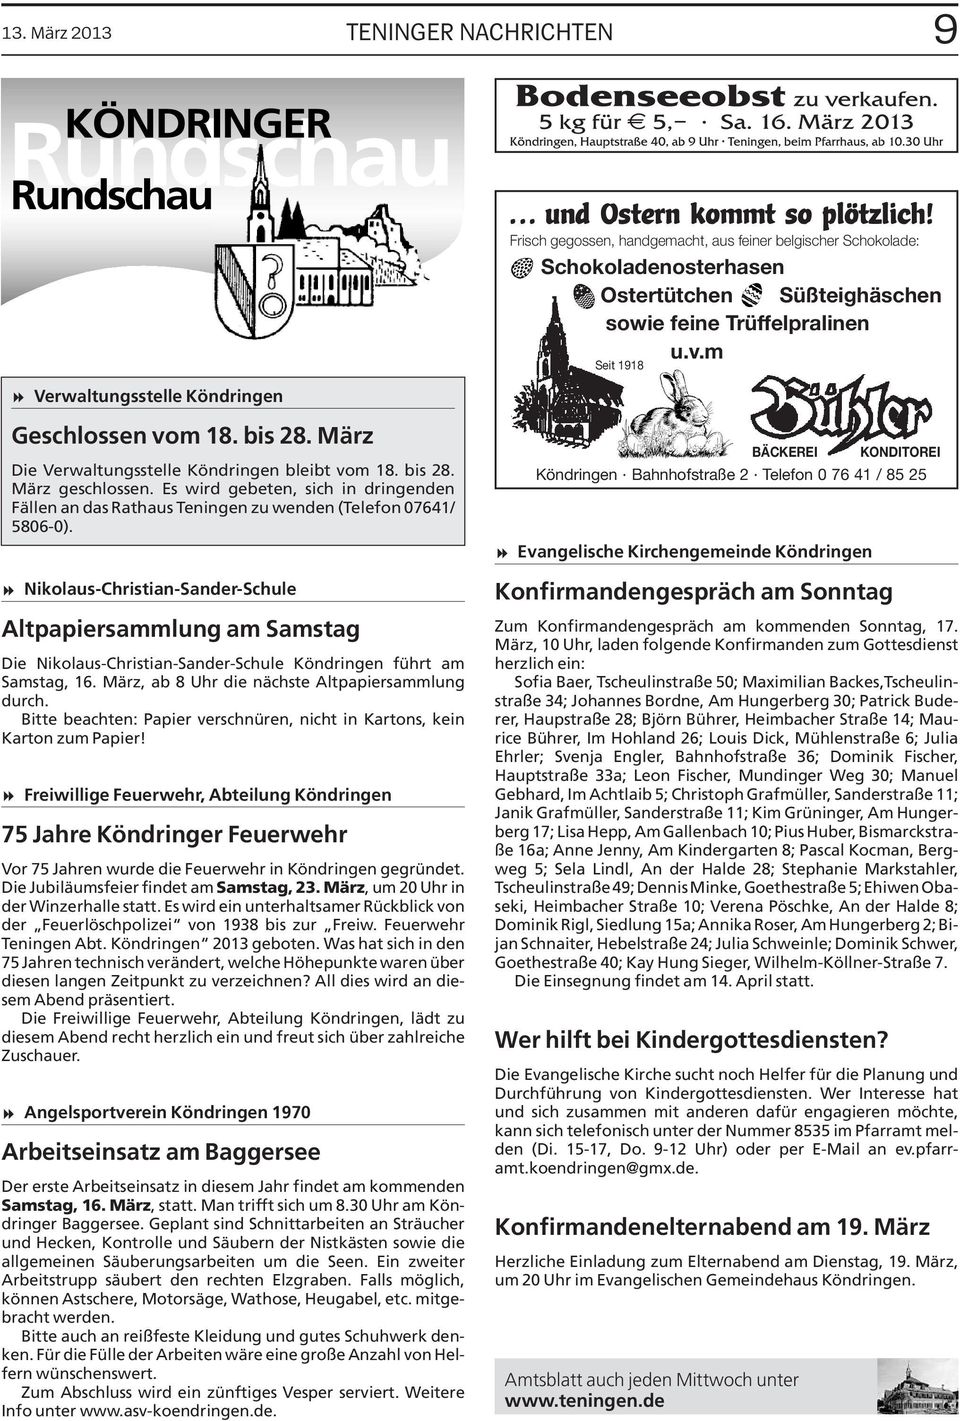 b Nikolaus-Christian-Sander-Schule Altpapiersammlung am Samstag Die Nikolaus-Christian-Sander-Schule Köndringen führt am Samstag, 16. März, ab 8 Uhr die nächste Altpapiersammlung durch.